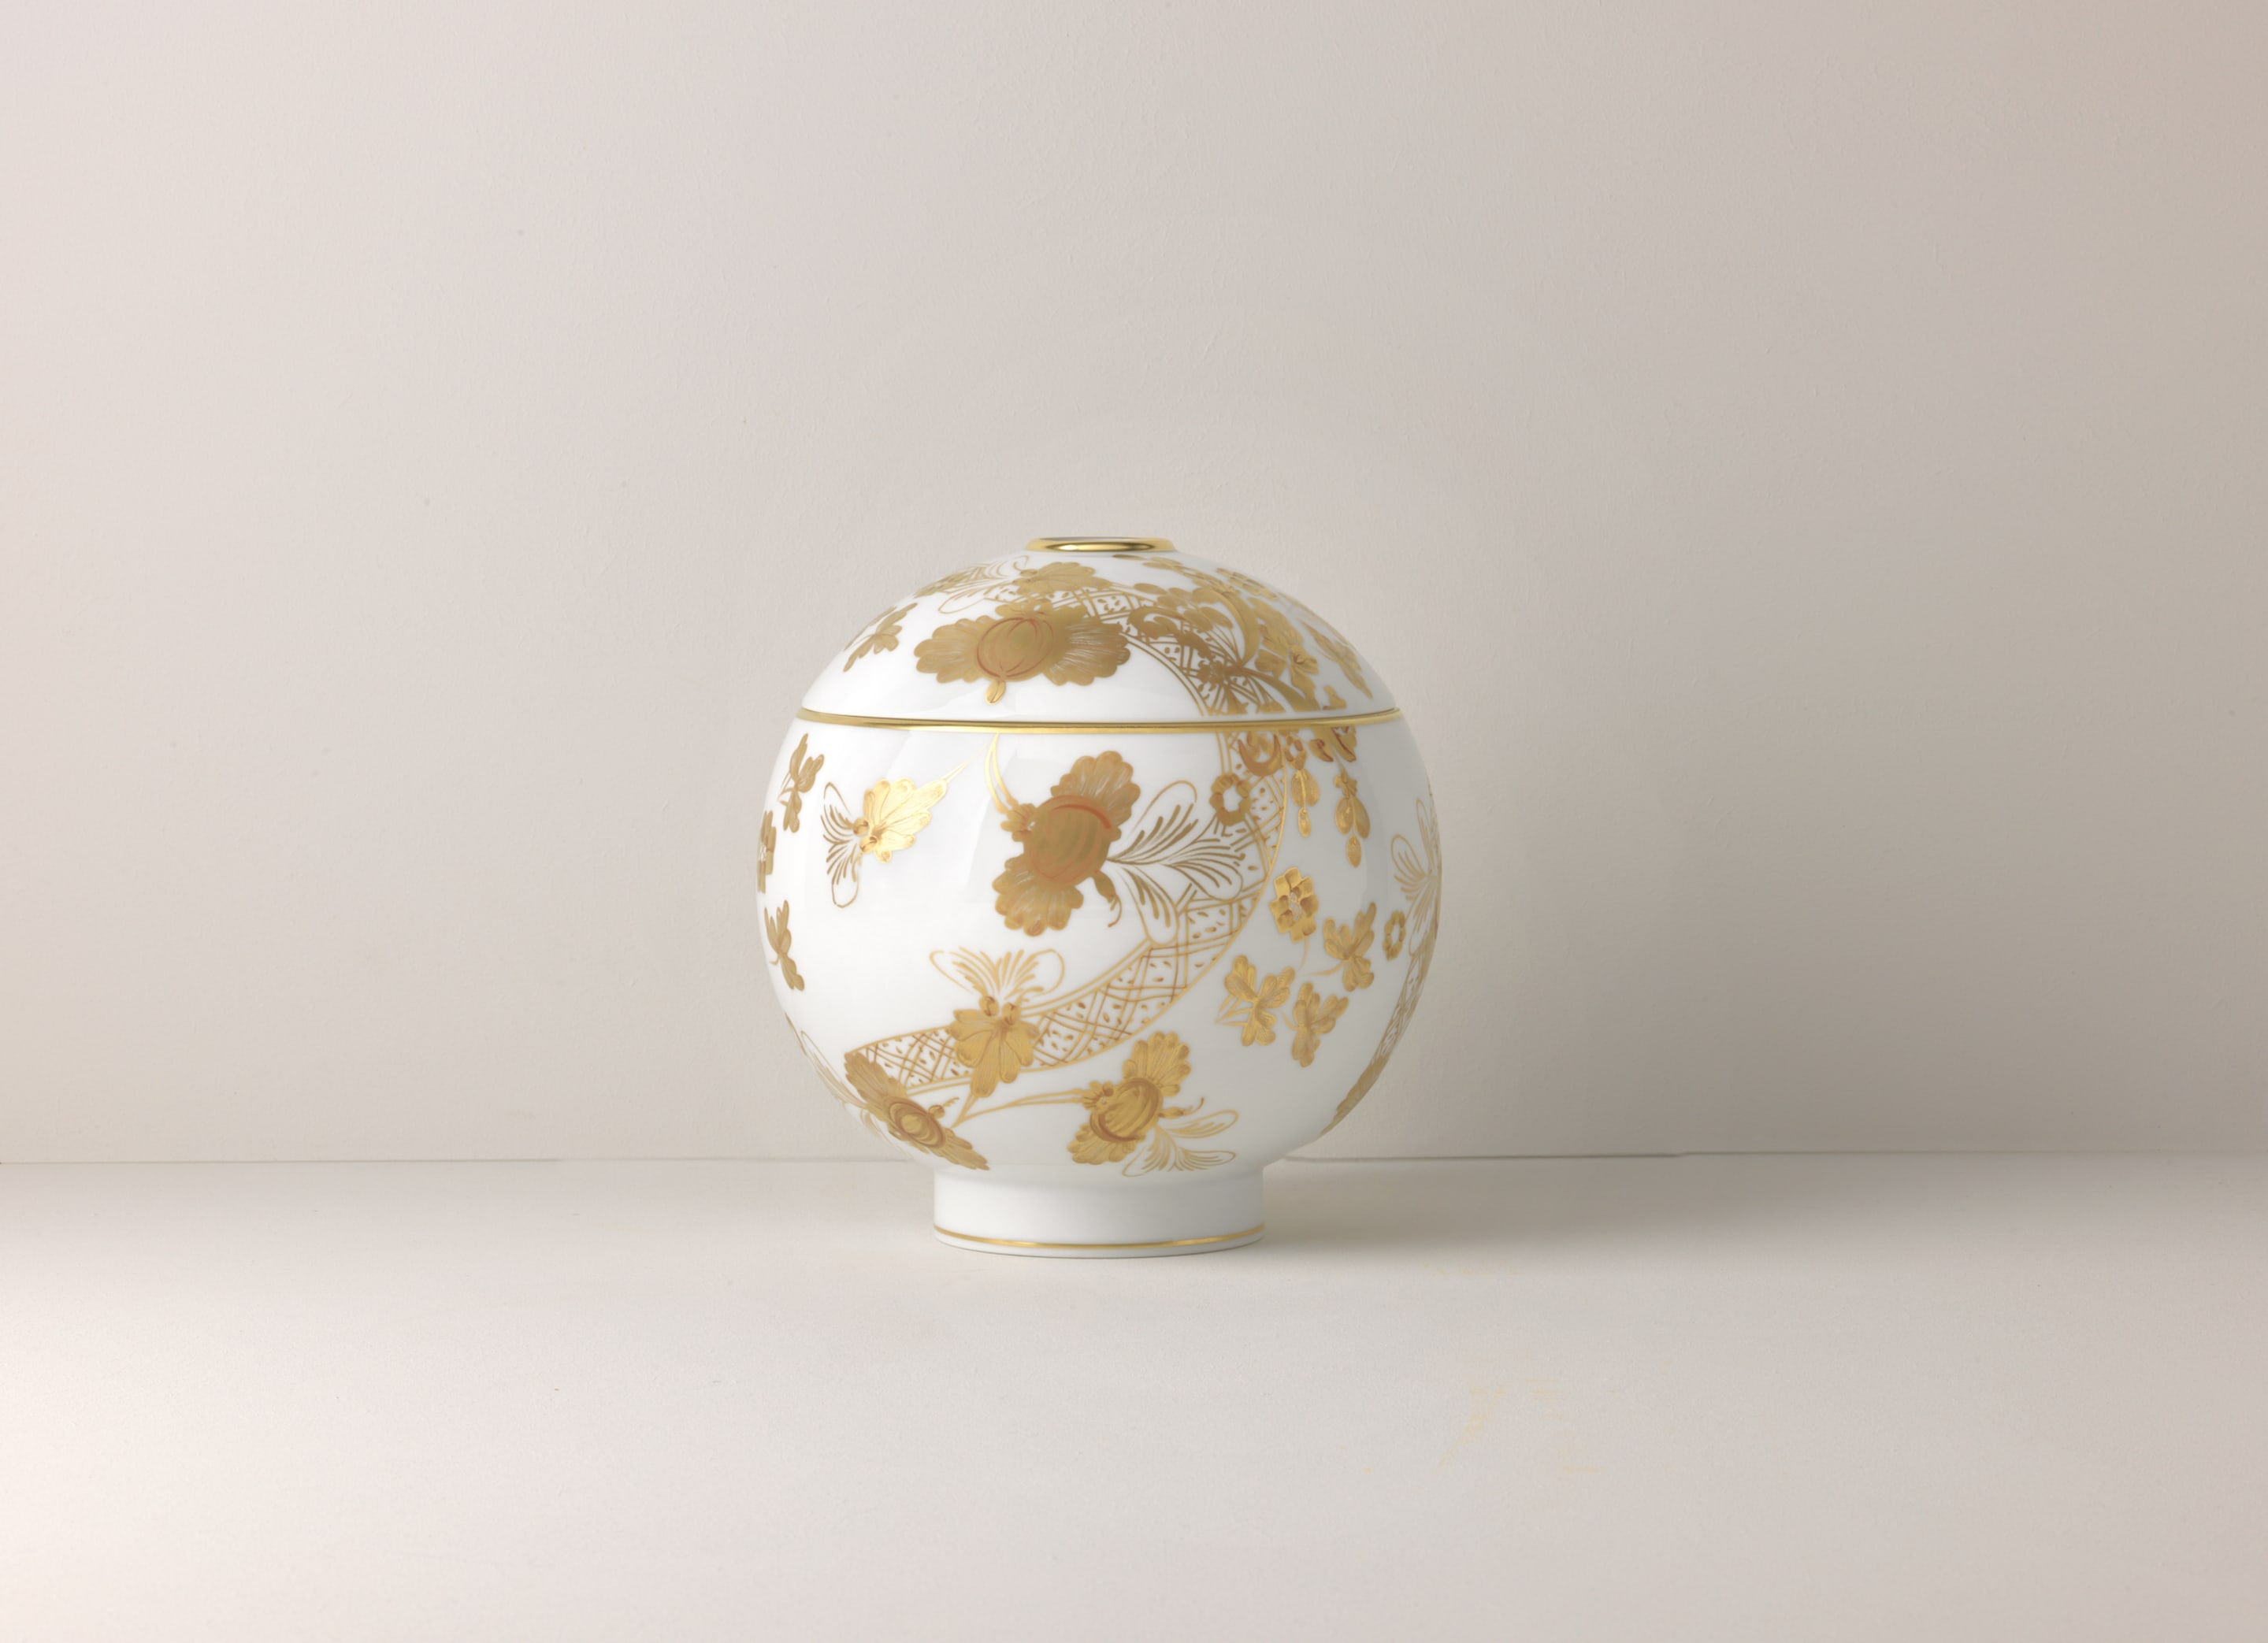 Oriente Italiano Porcelain Orb (Diffuser Sphere)